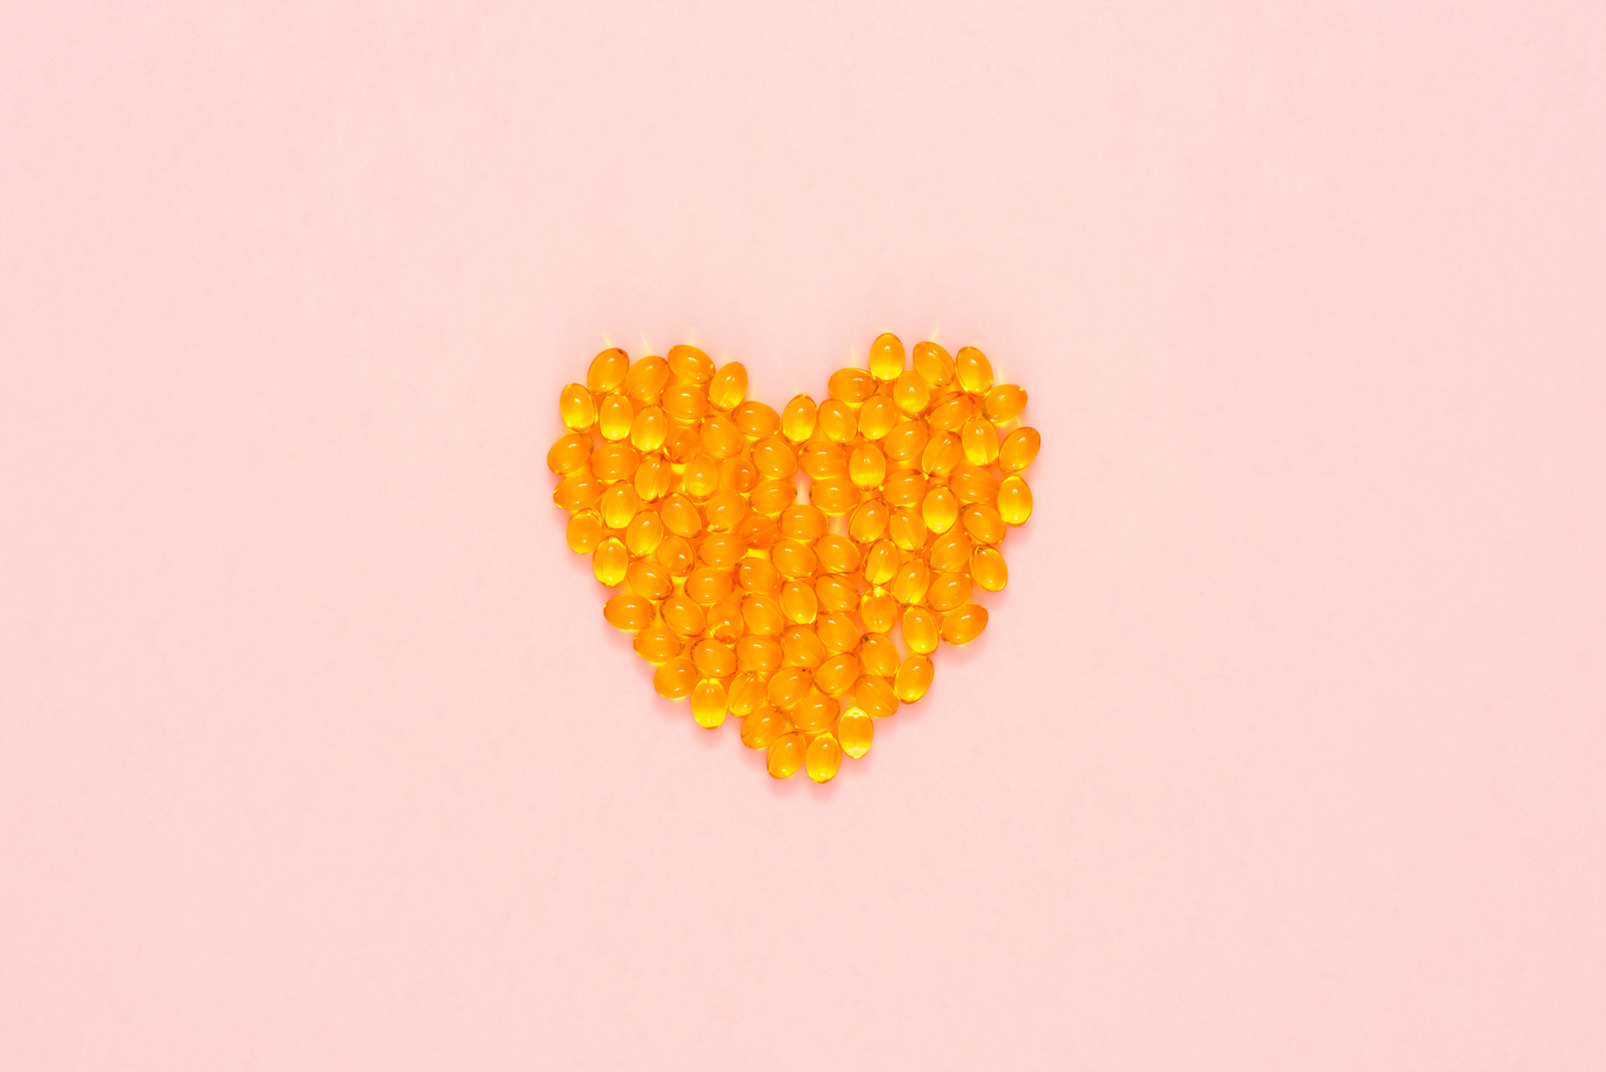 Yellow pills arranged in a shape of heart